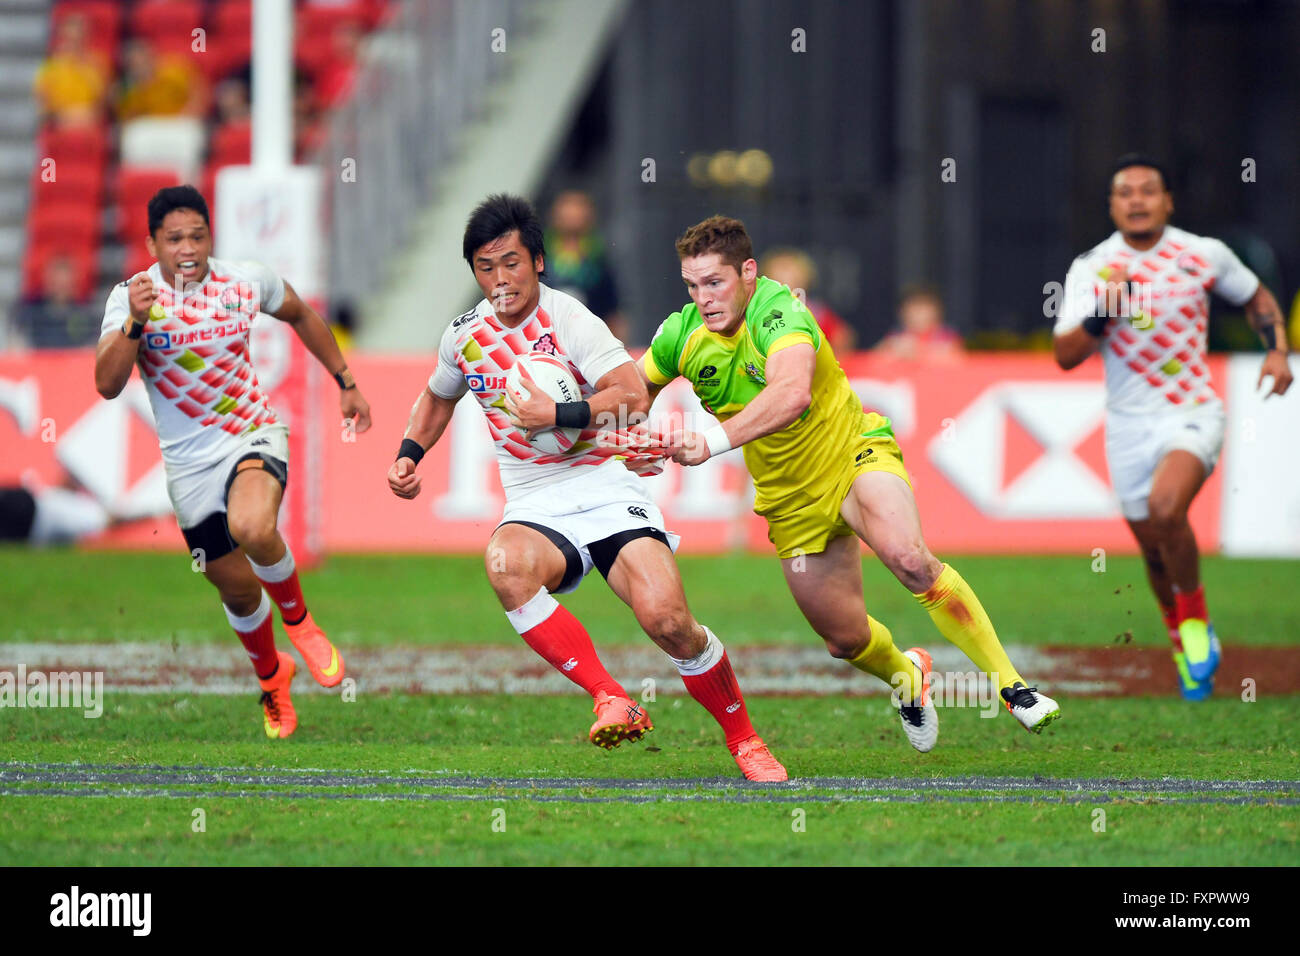 Katsuyuki Sakai (JPN), APRL 16, 2016 - Rugby : HSBC Sevens World Series, Singapore Sevens match Japan and Australia at National Stadium in Singapore. (Photo by Haruhiko Otsuka/AFLO) Stock Photo